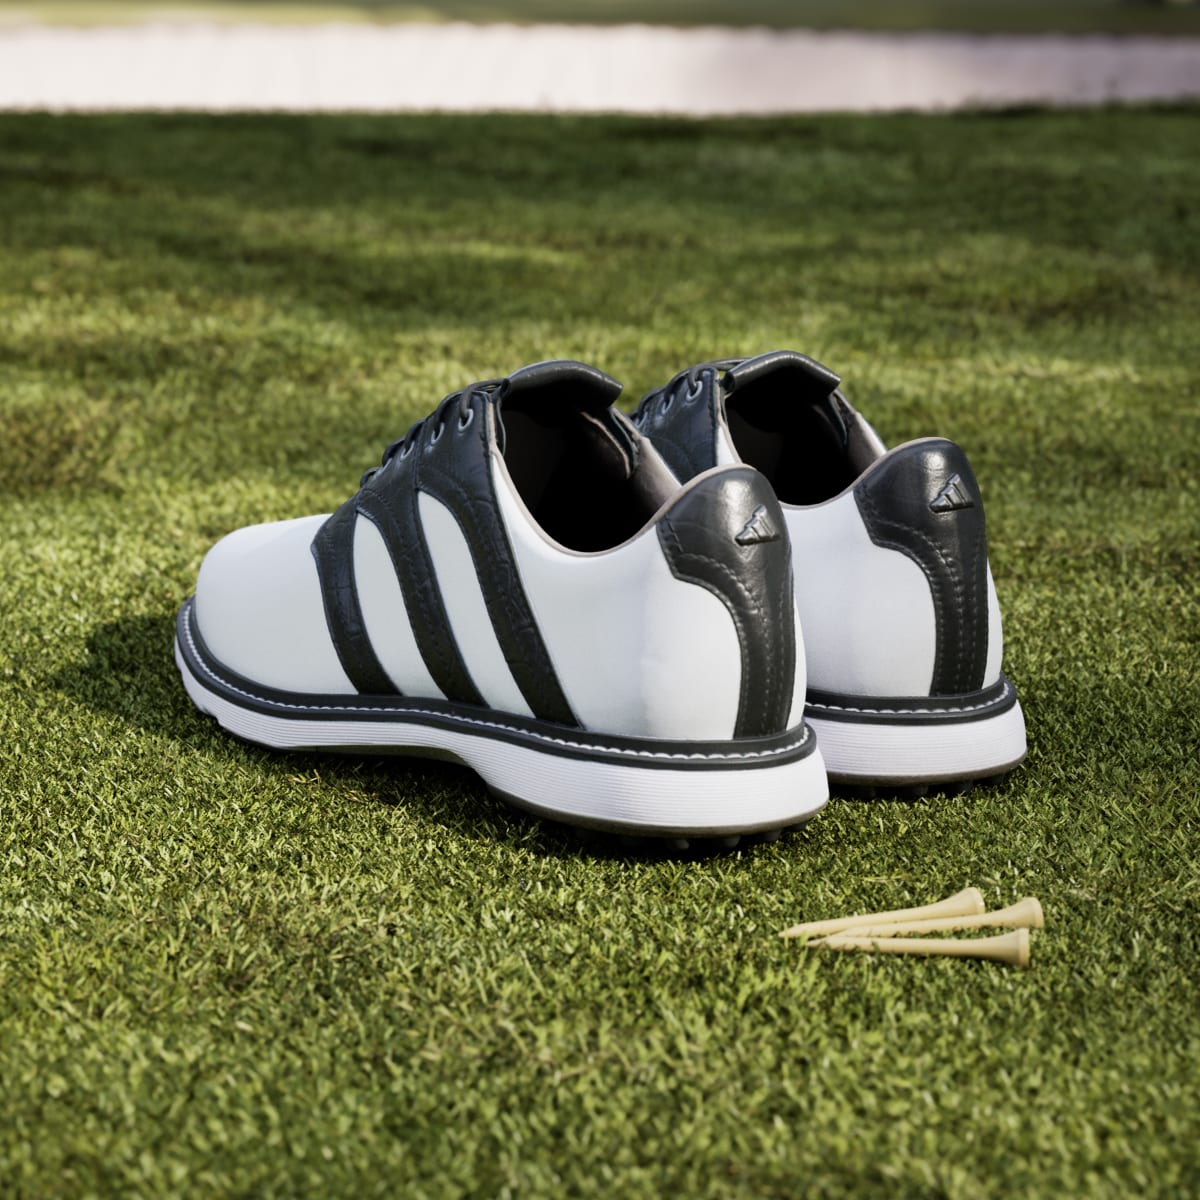 Adidas Buty MC Z-Traxion Spikeless Golf. 5